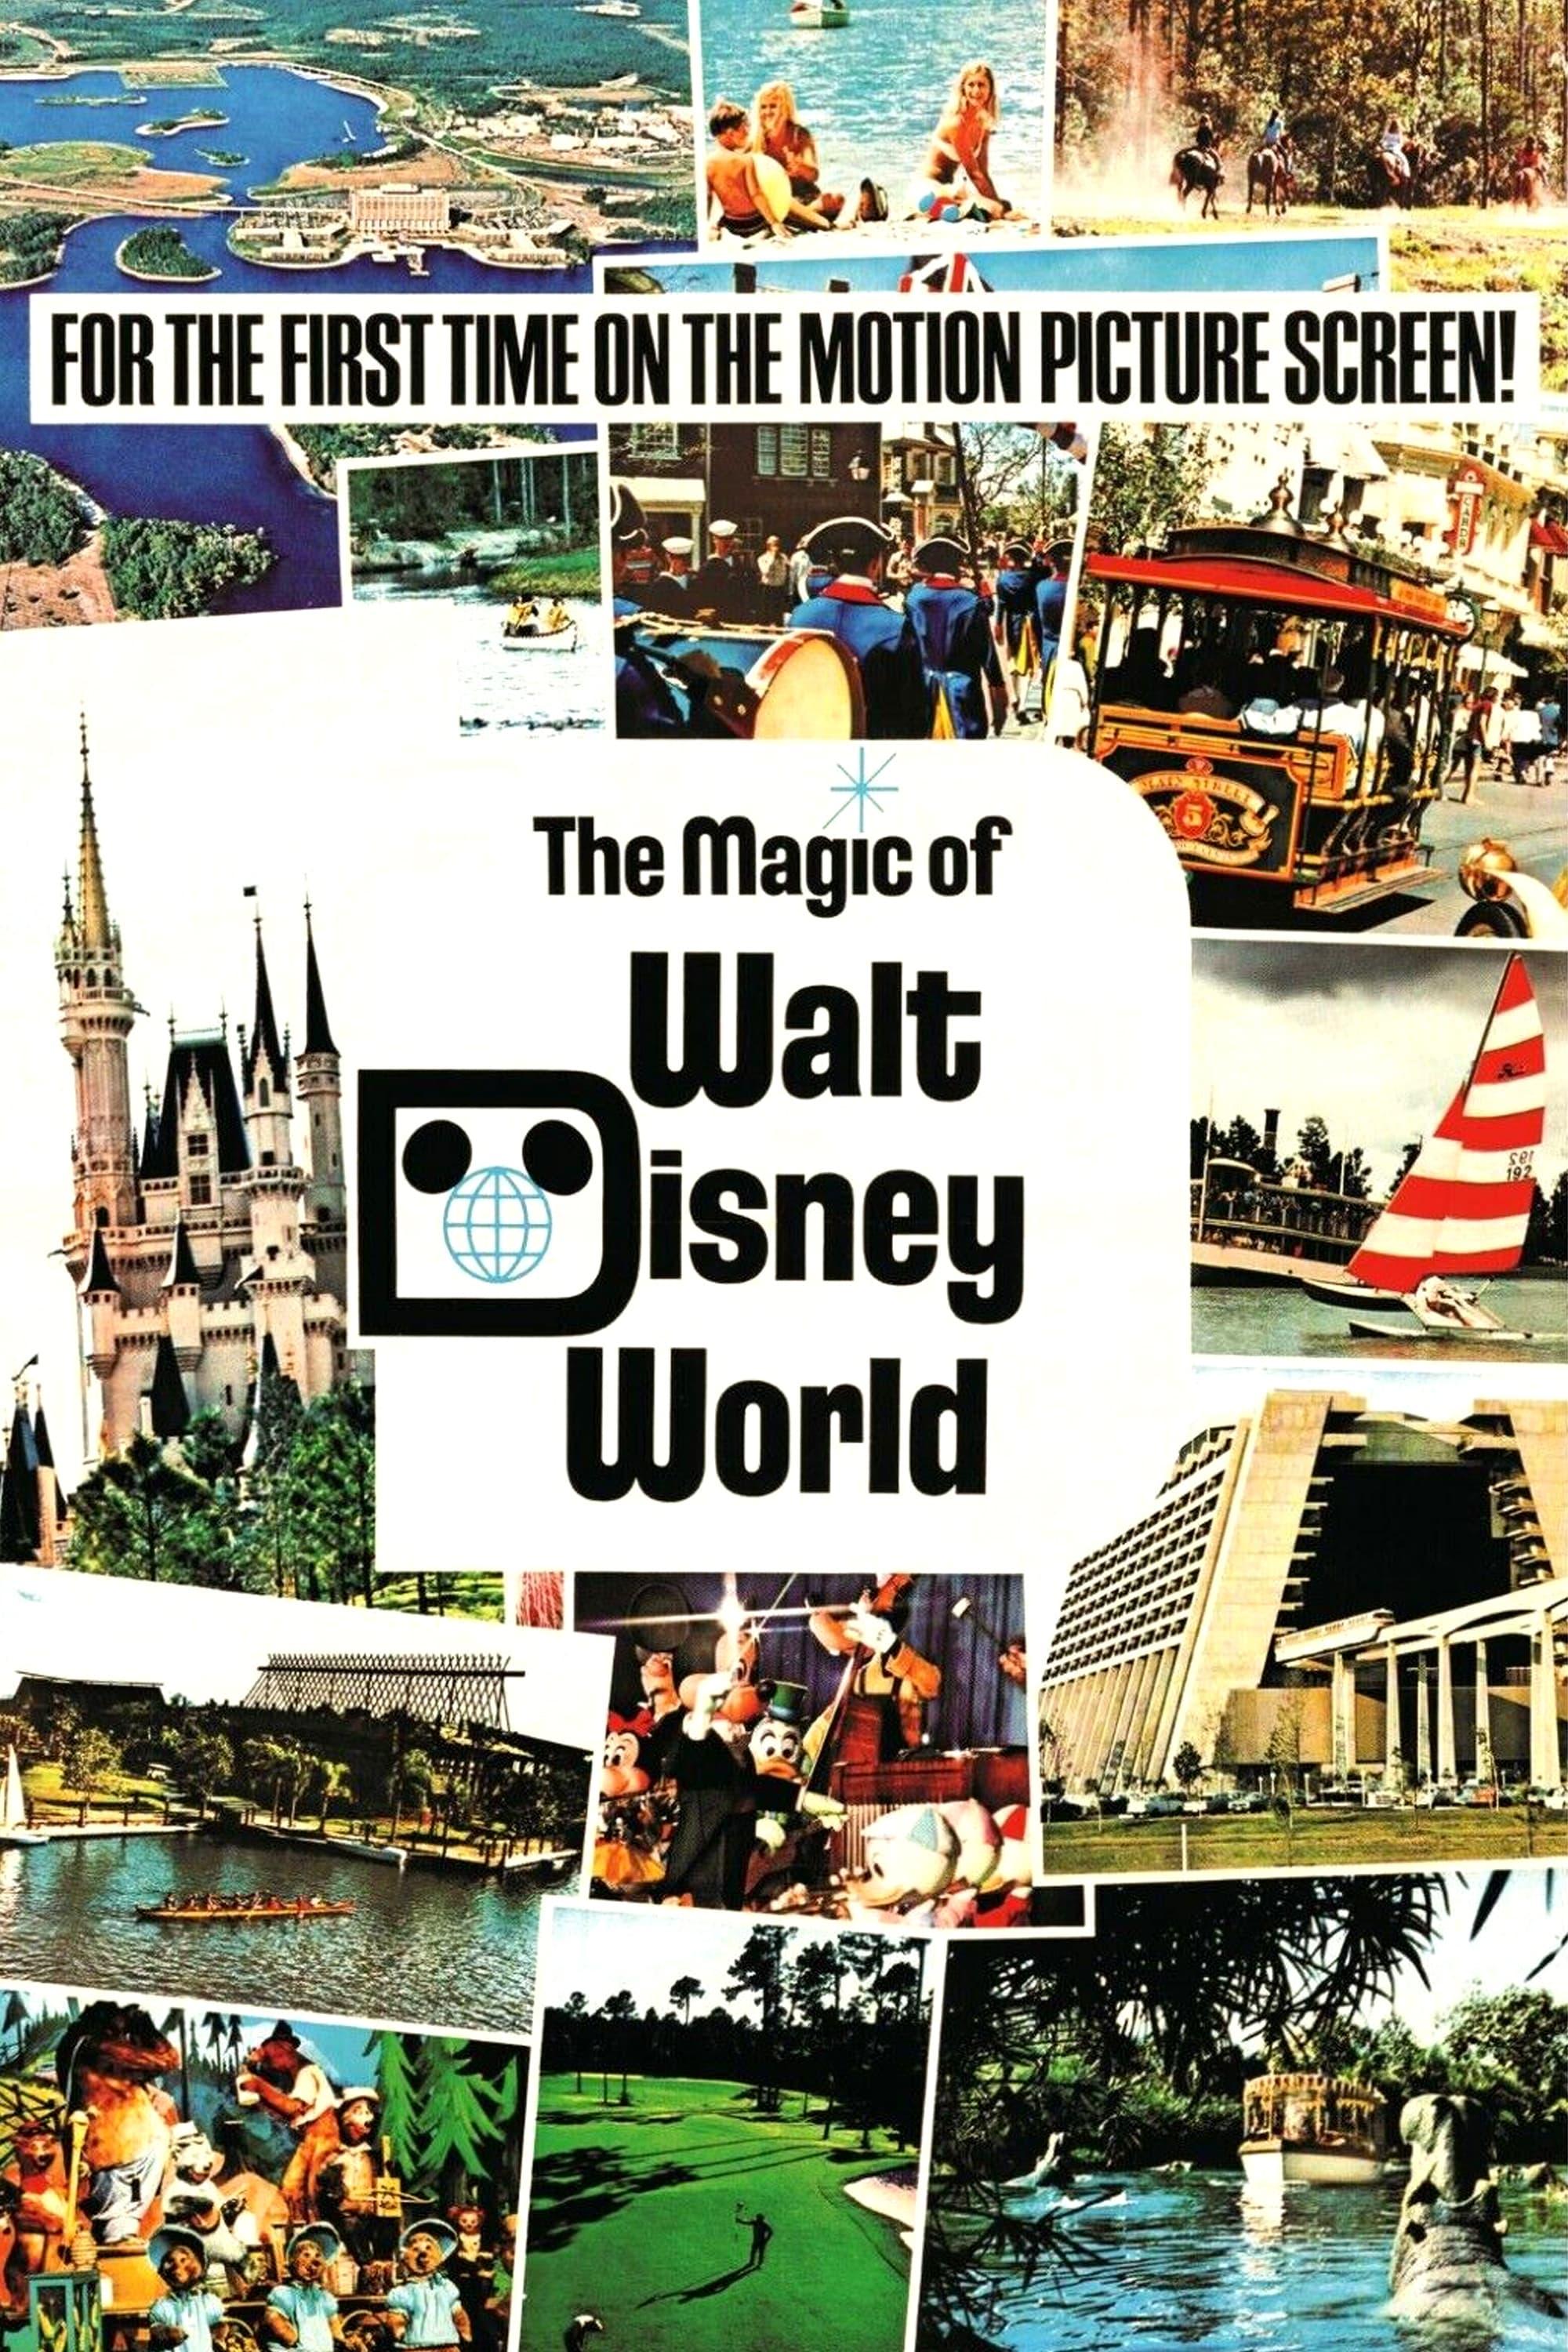 The Magic of Walt Disney World poster